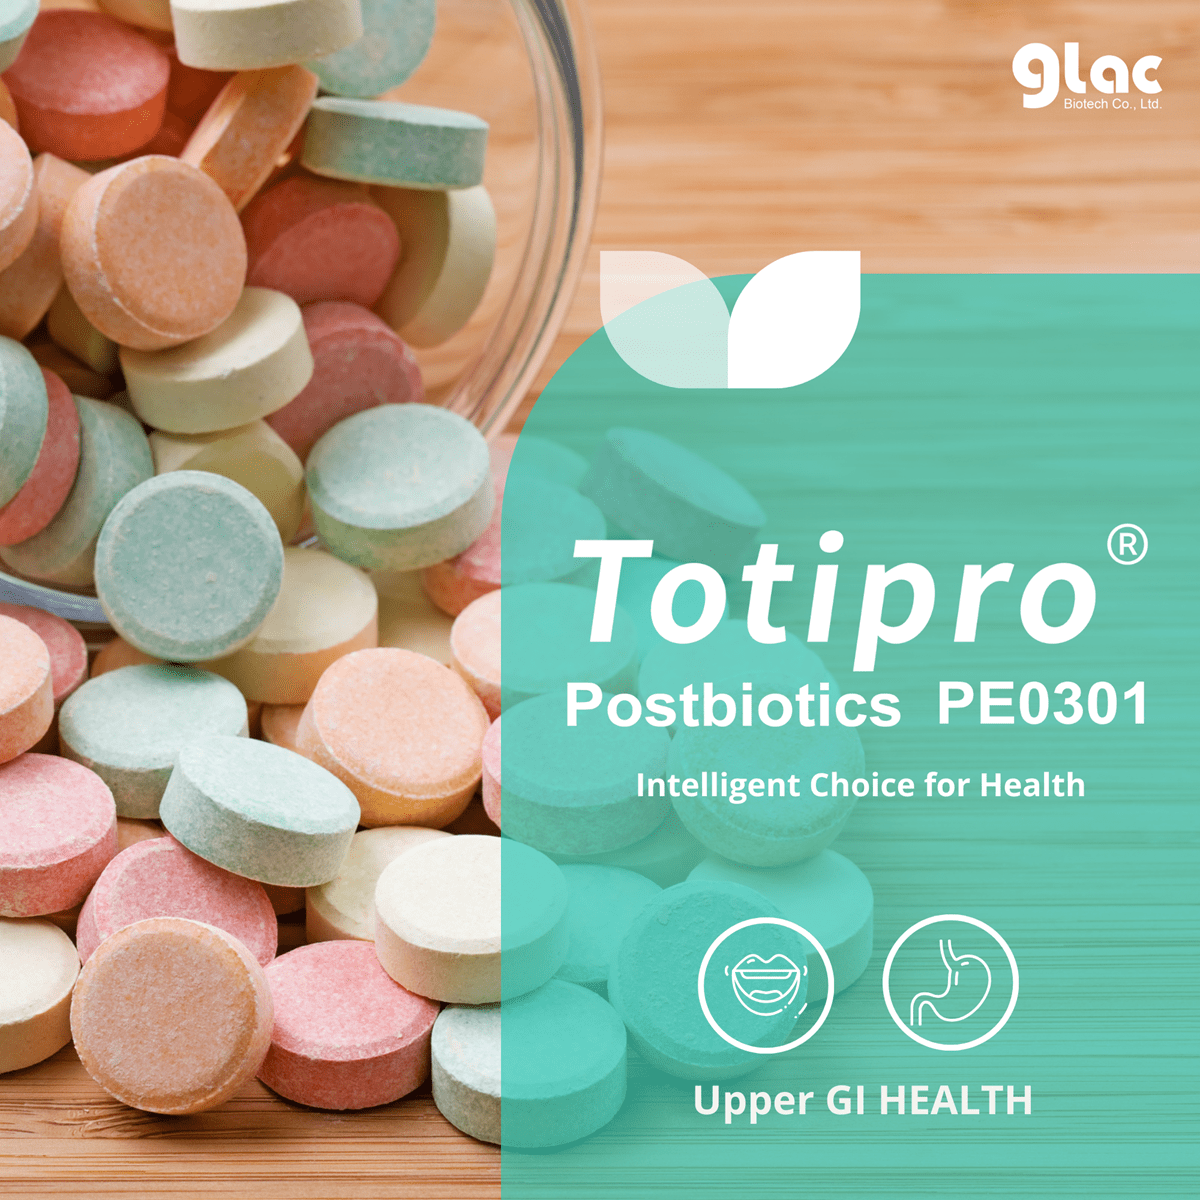 Totipro® Postbiotics PE0301 for Oral Care Applications